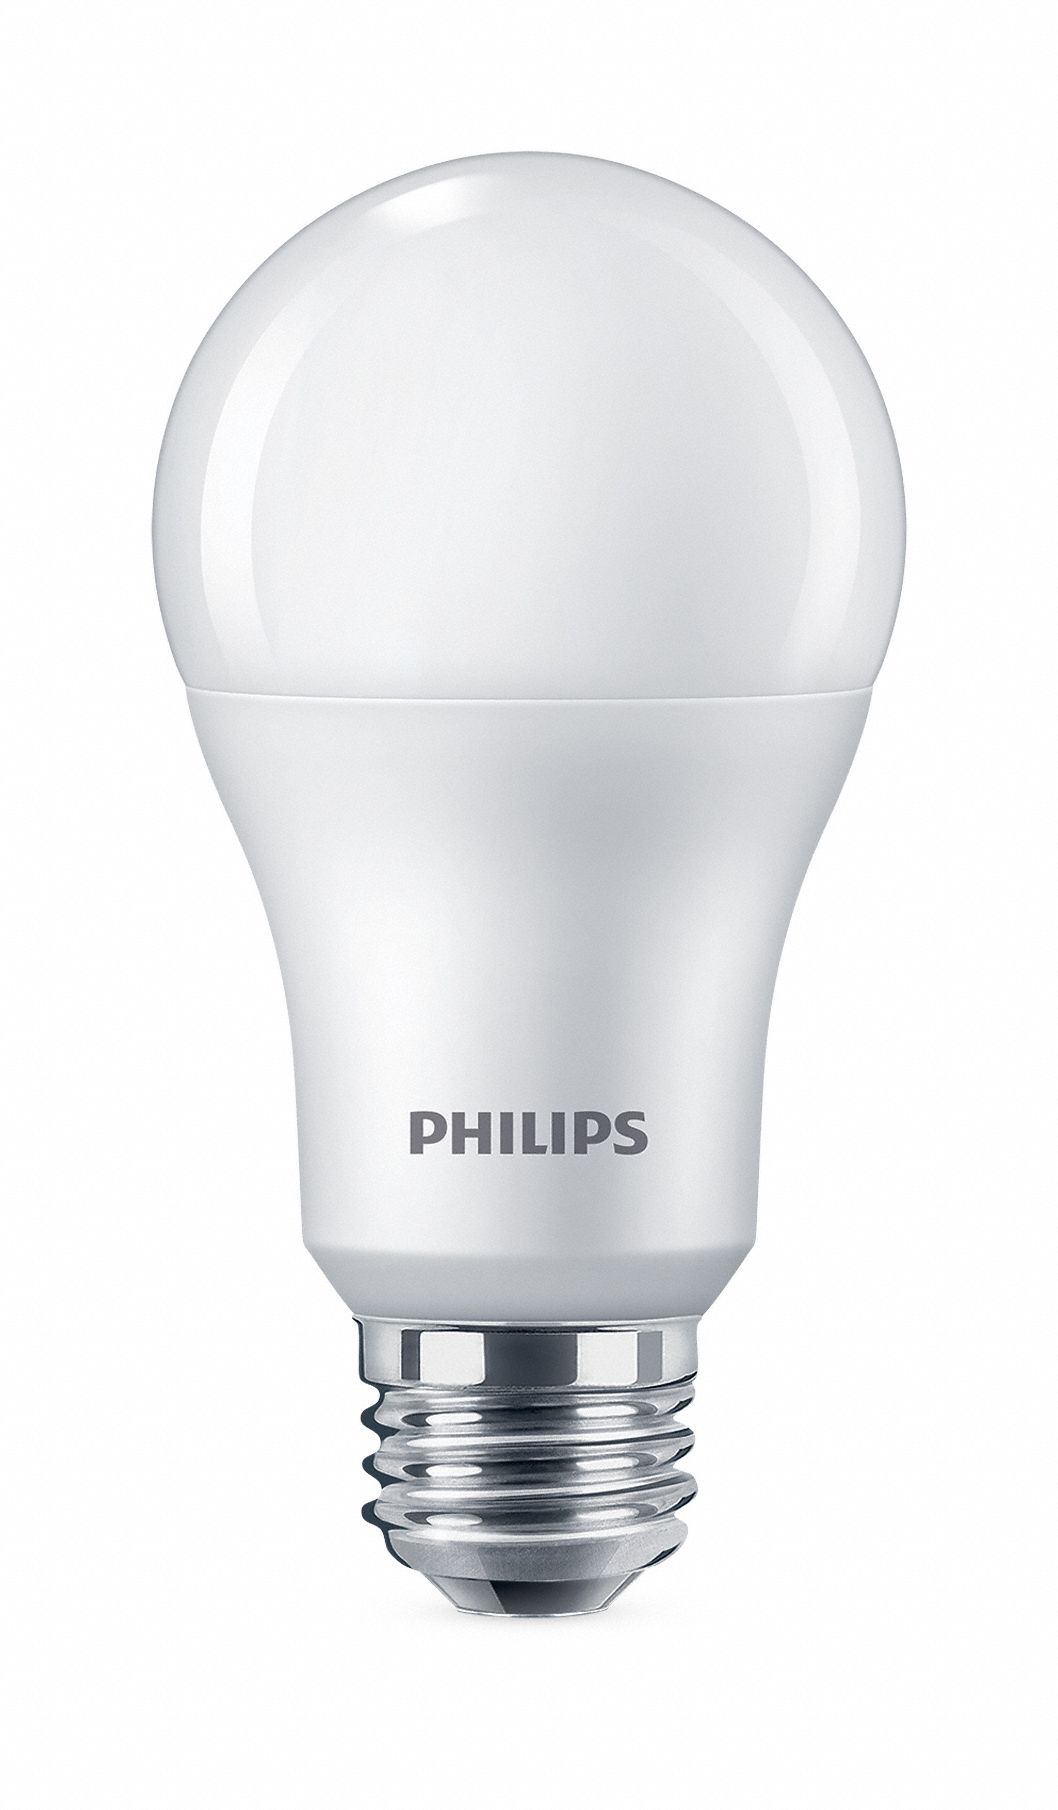 PHILIPS, A19, Screw (E26), LED Lamp Replacement - 4/1FB - Grainger